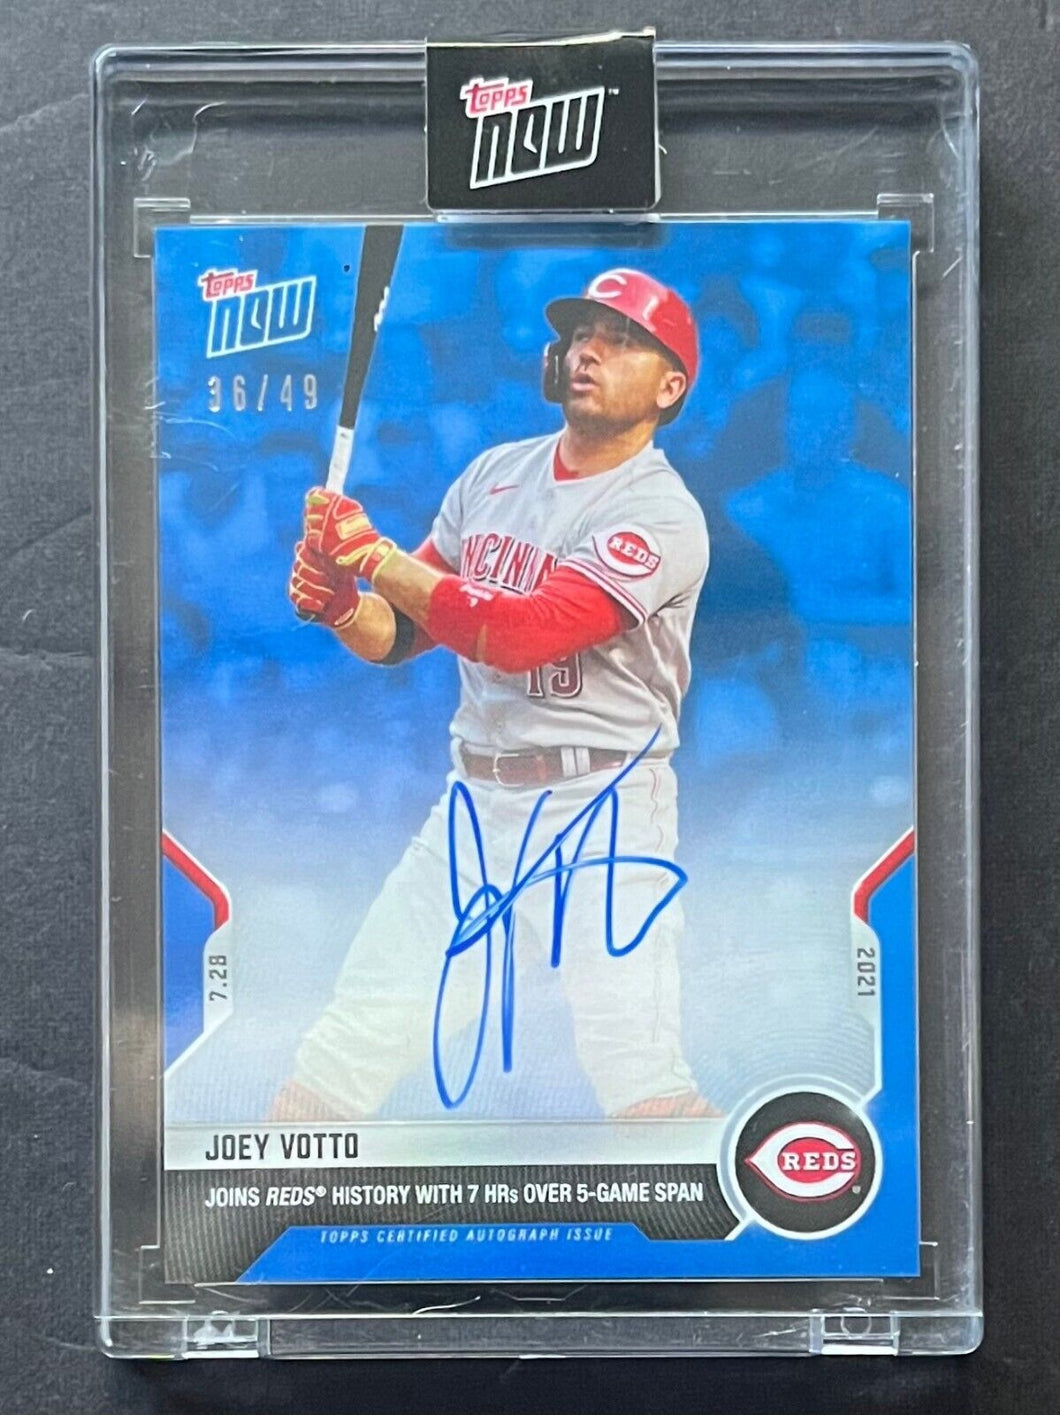 2021 Topps Now Joey Votto Signed Card Auto 36/49 Cincinnati Reds MLB Baseball